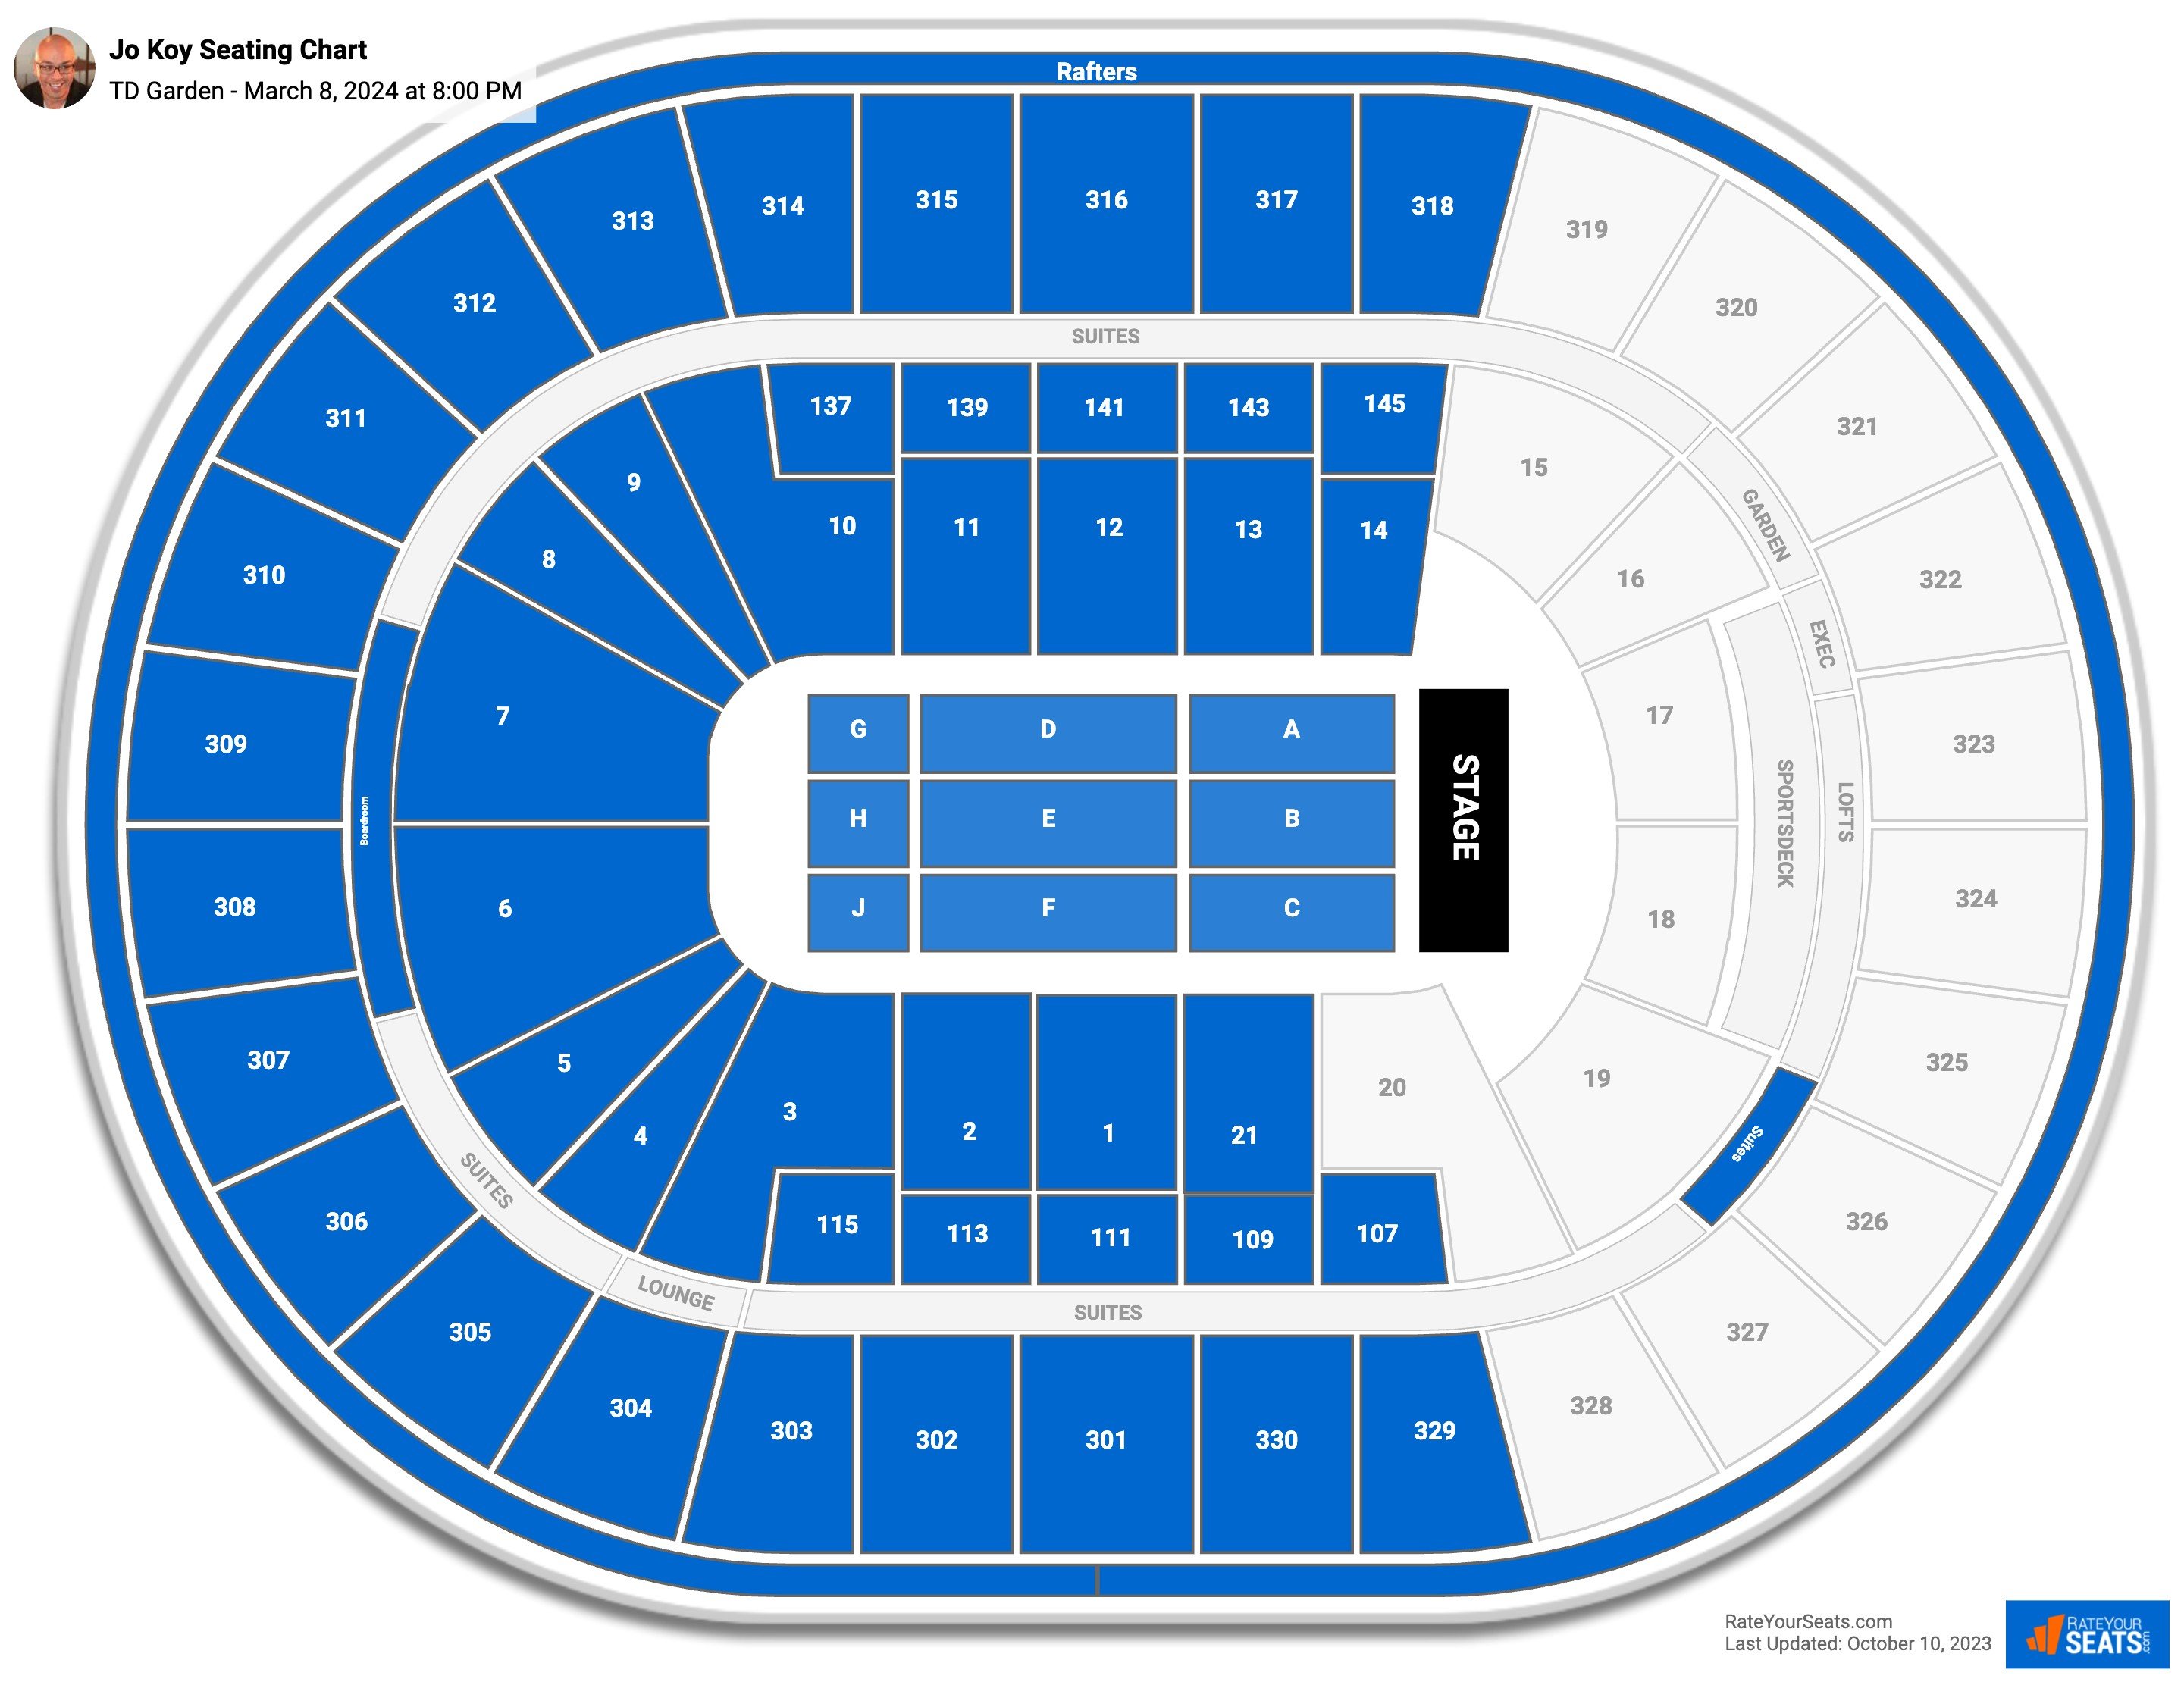 Td Garden Concert Seating Chart